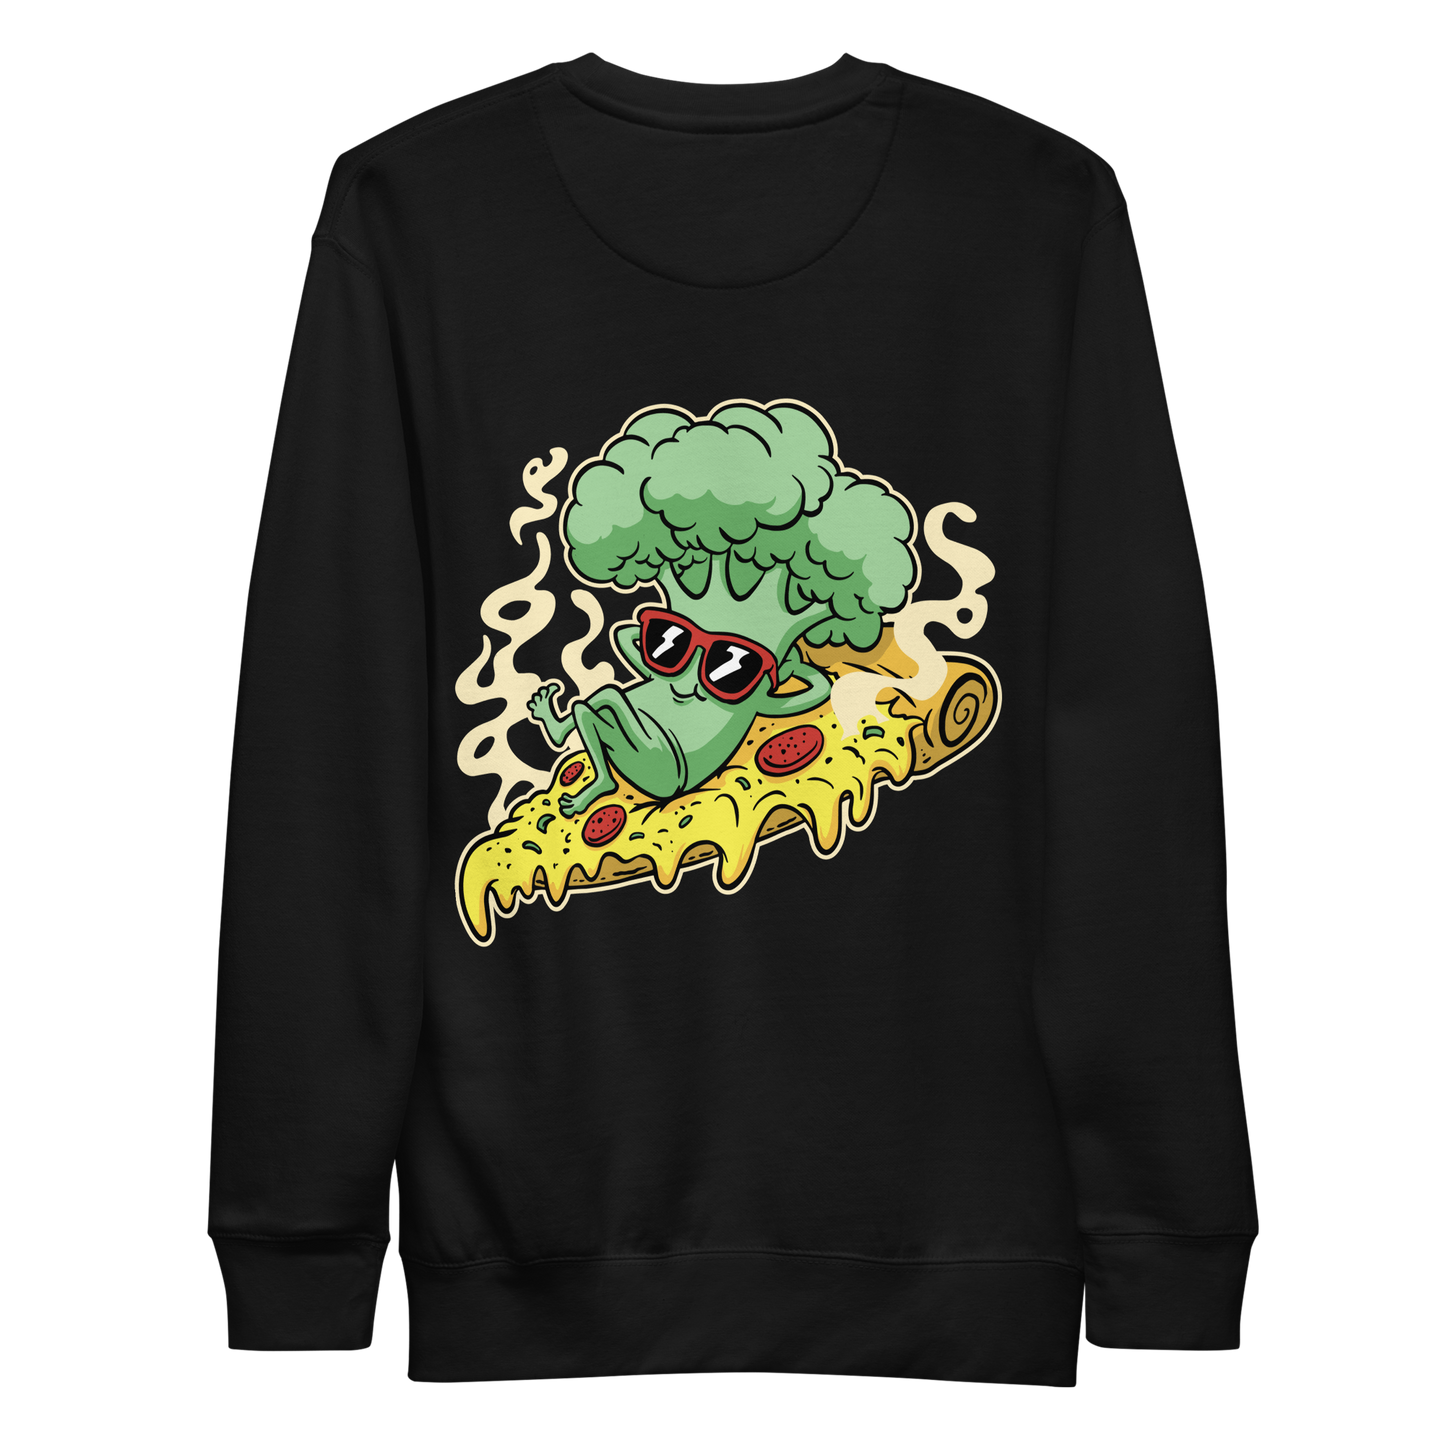 Broccoli pizza | Unisex Premium Sweatshirt - F&B